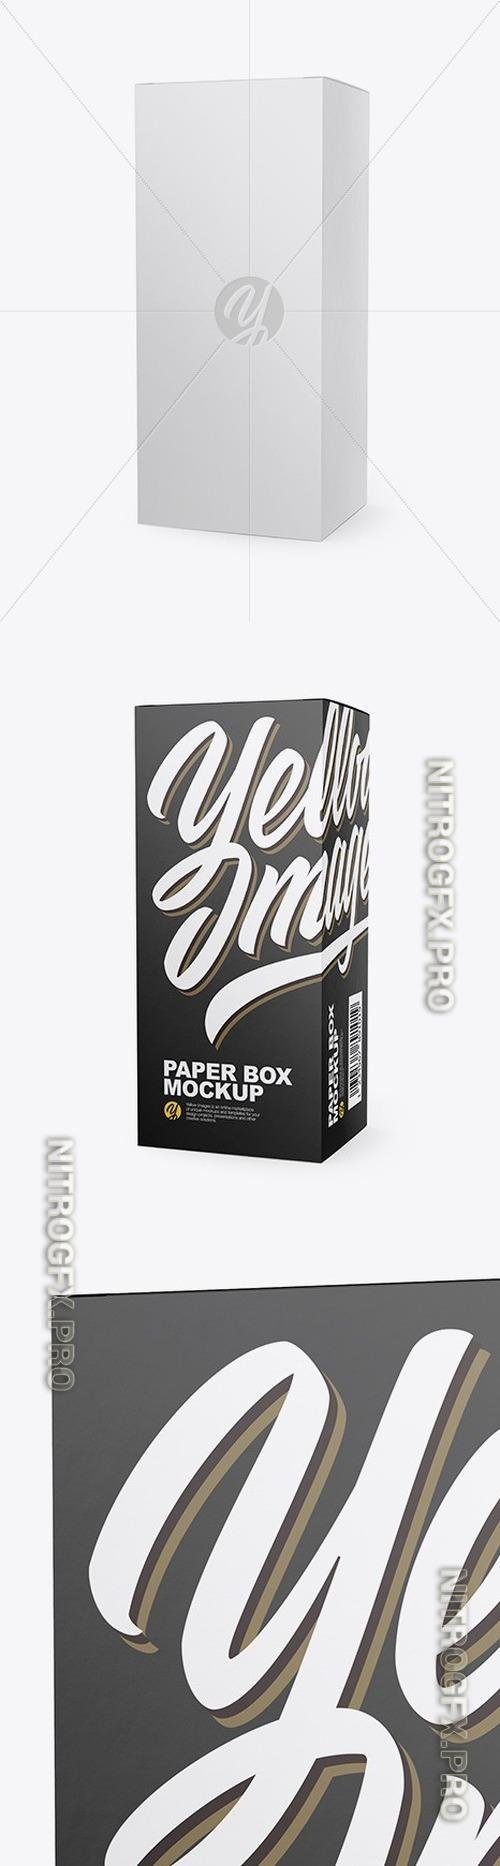 Paper Box Mockup - Half Side View 49950